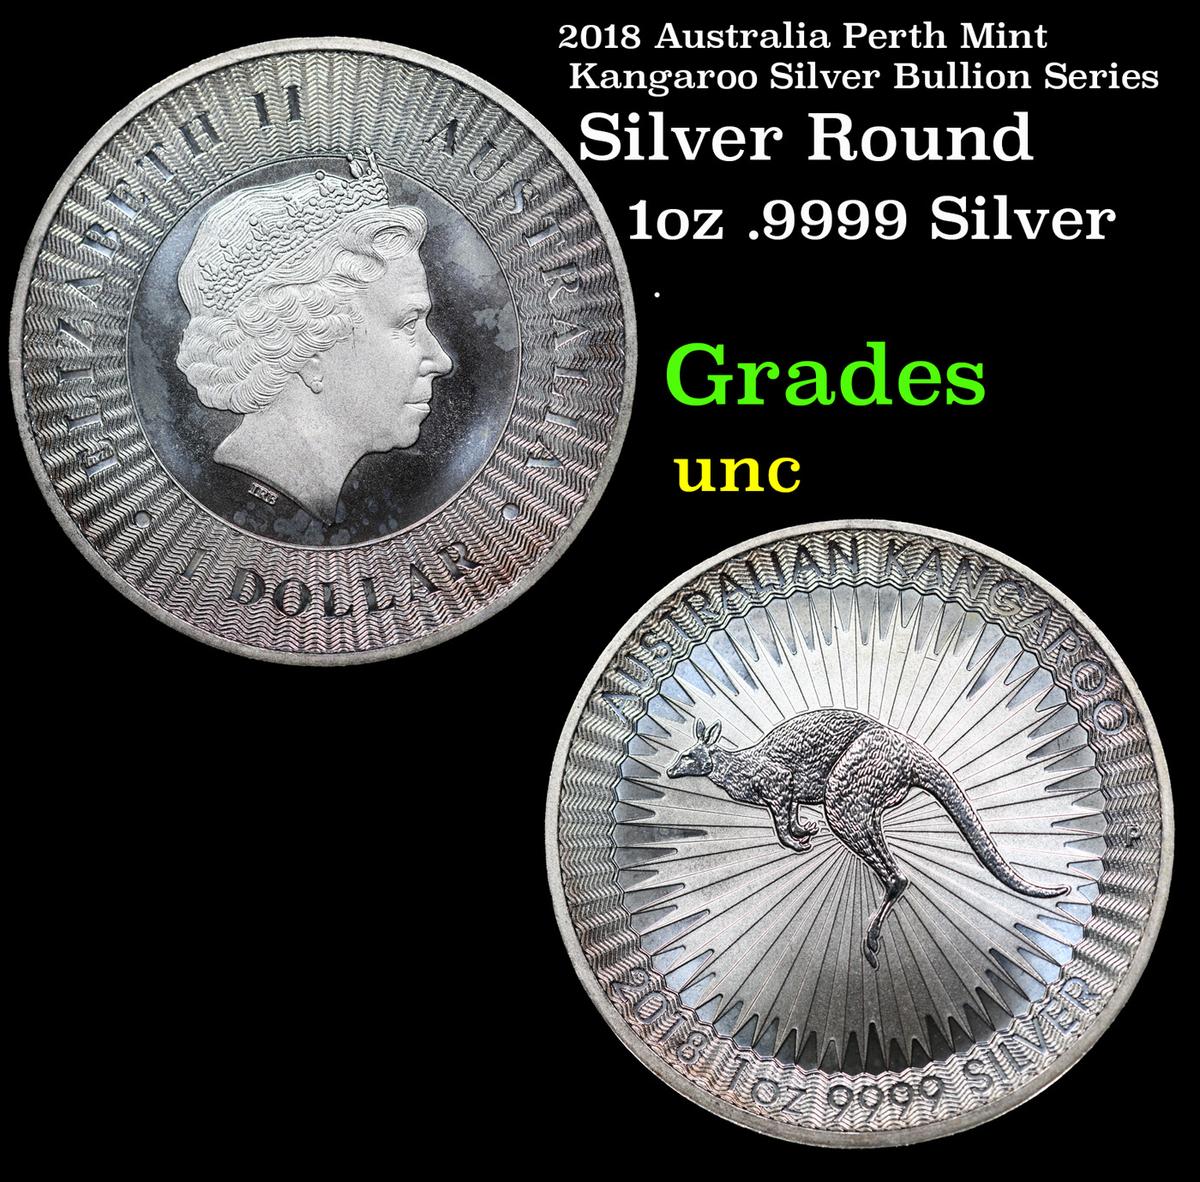 2018 Australia Perth Mint Kangaroo Silver Bullion Series Grades Brilliant Uncirculated